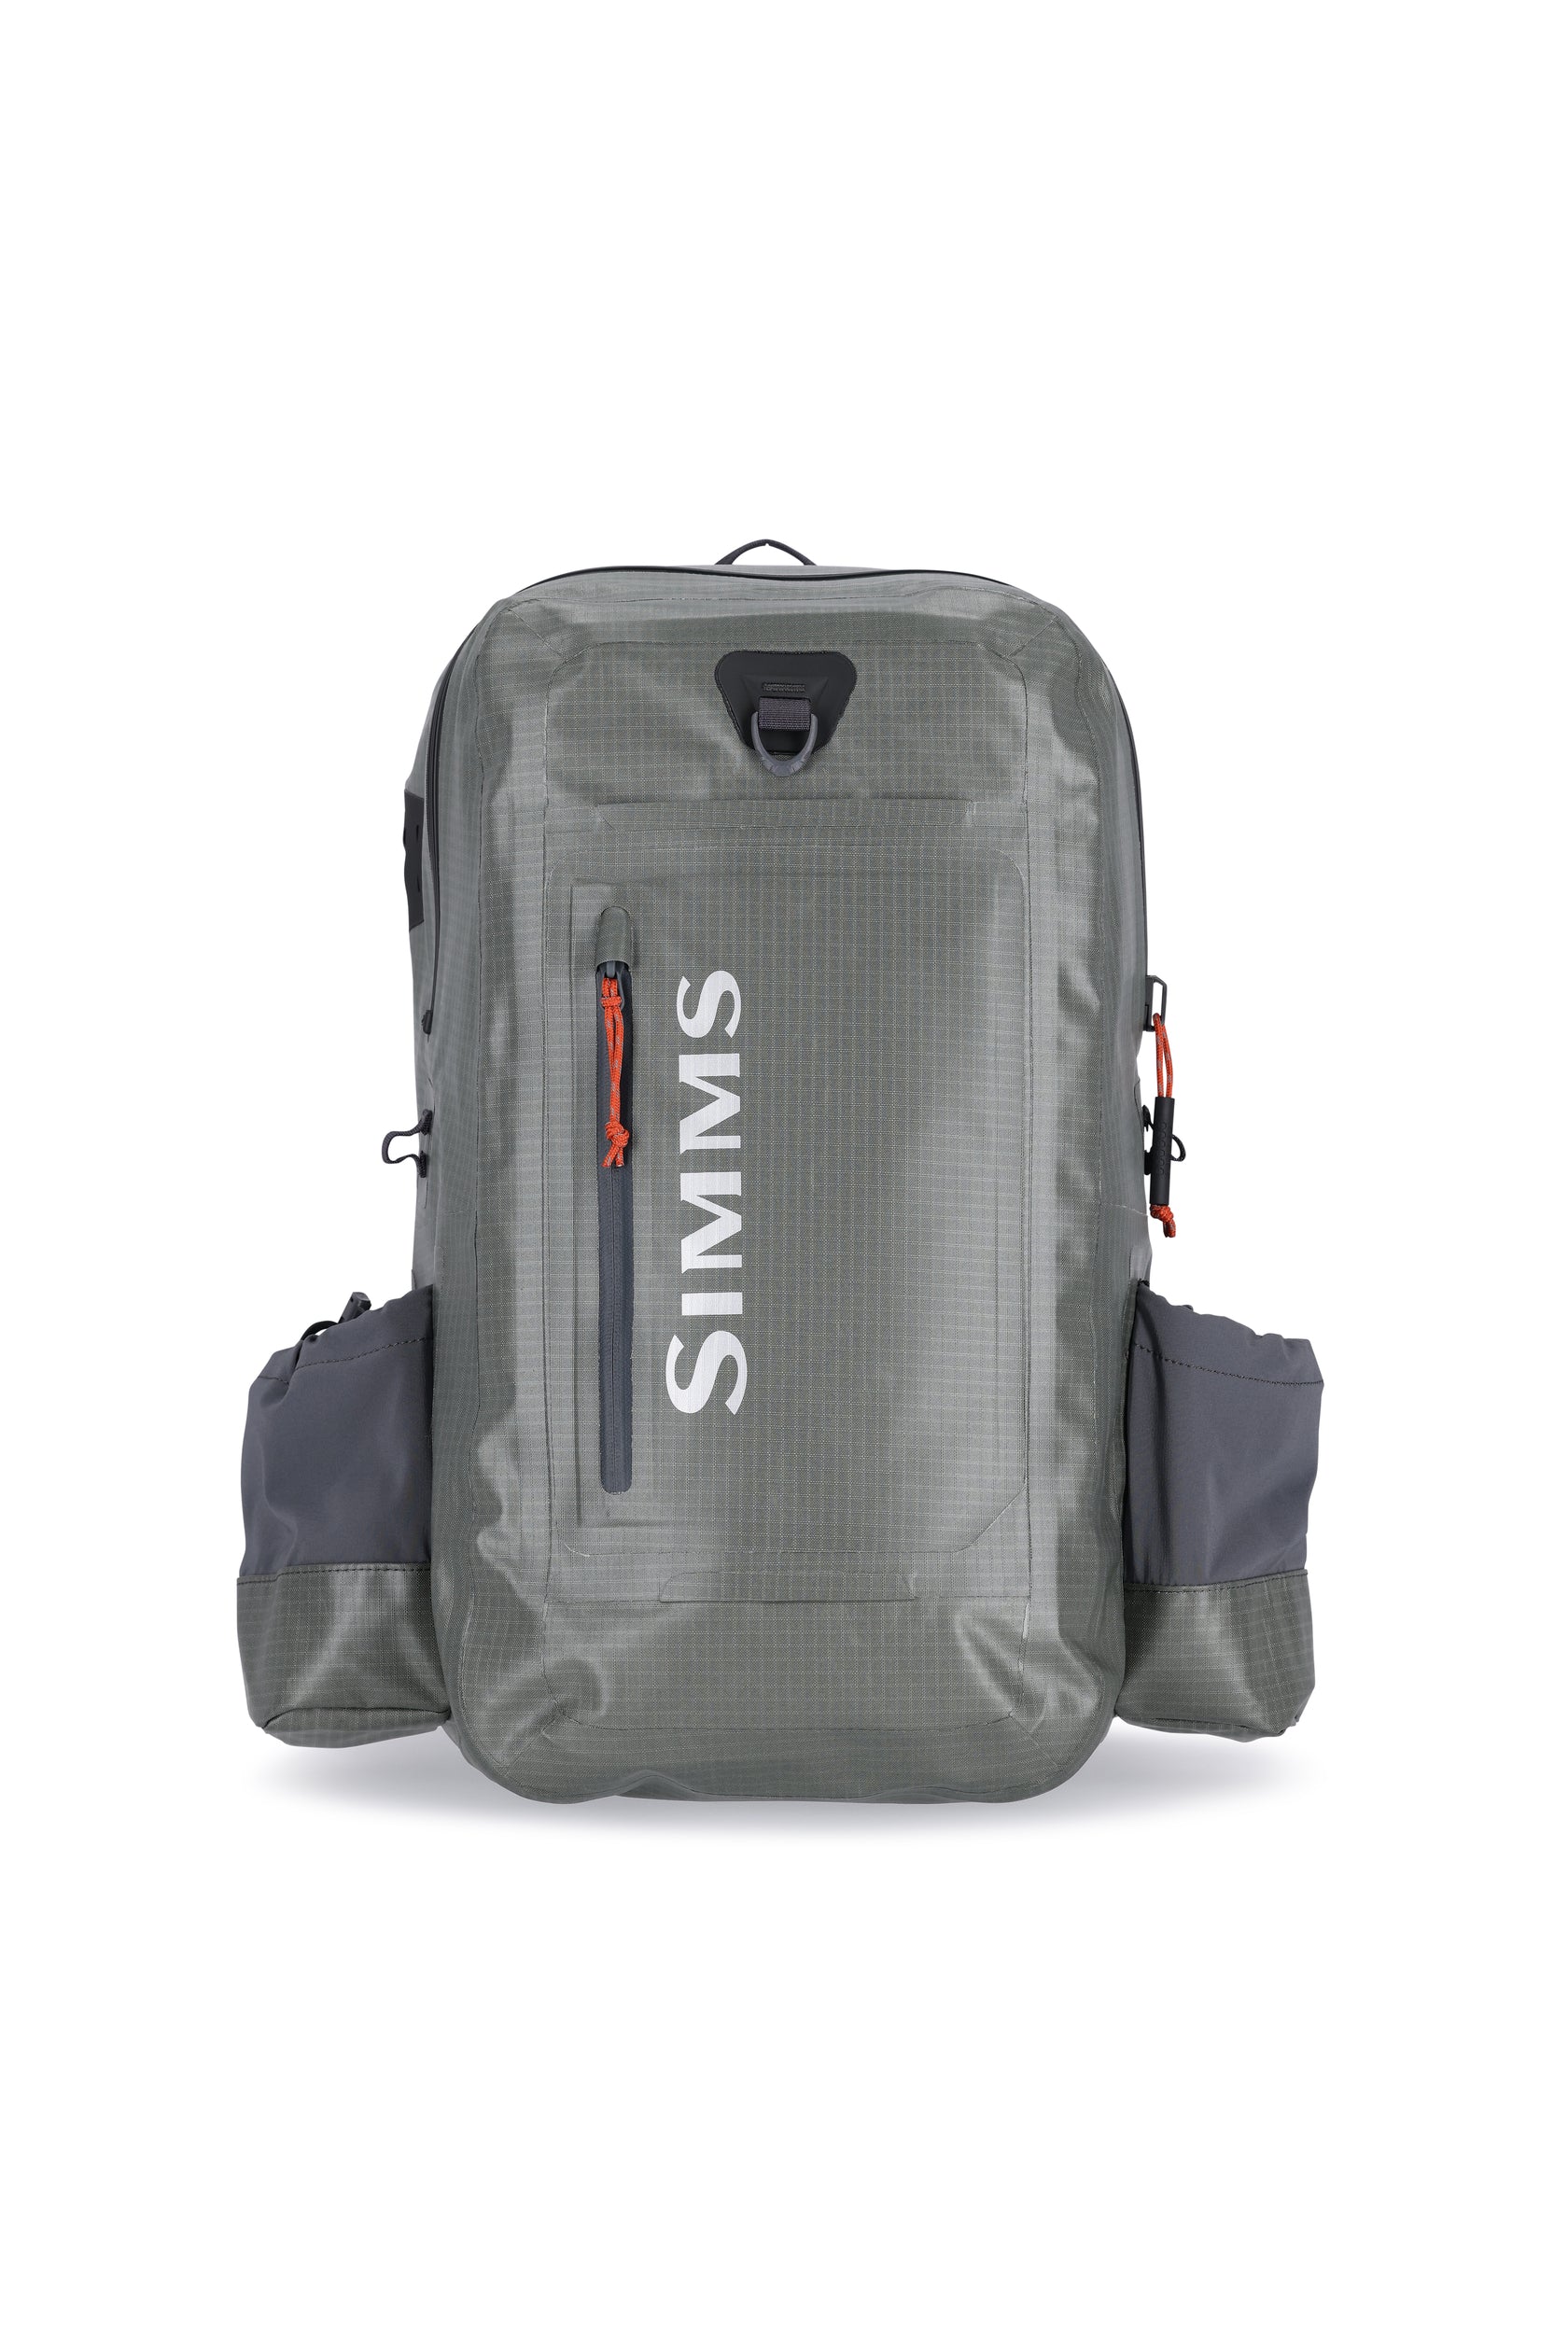 Simms Dry Creek Z Backpack 35L